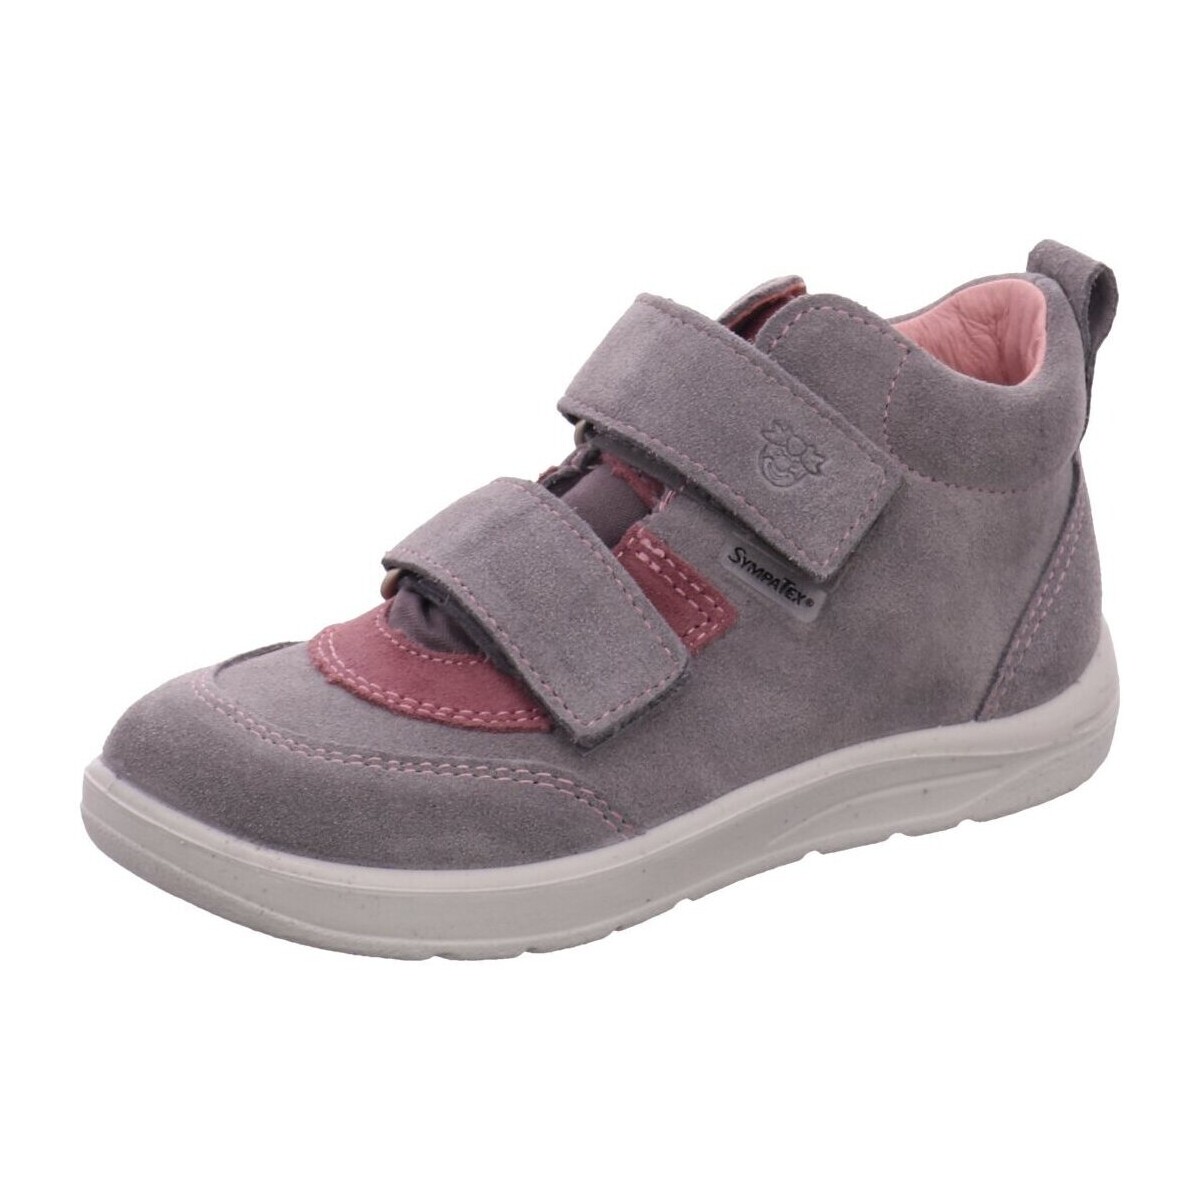 Schuhe Mädchen Babyschuhe Pepino By Ricosta Maedchen 50 2002002/450 Grau